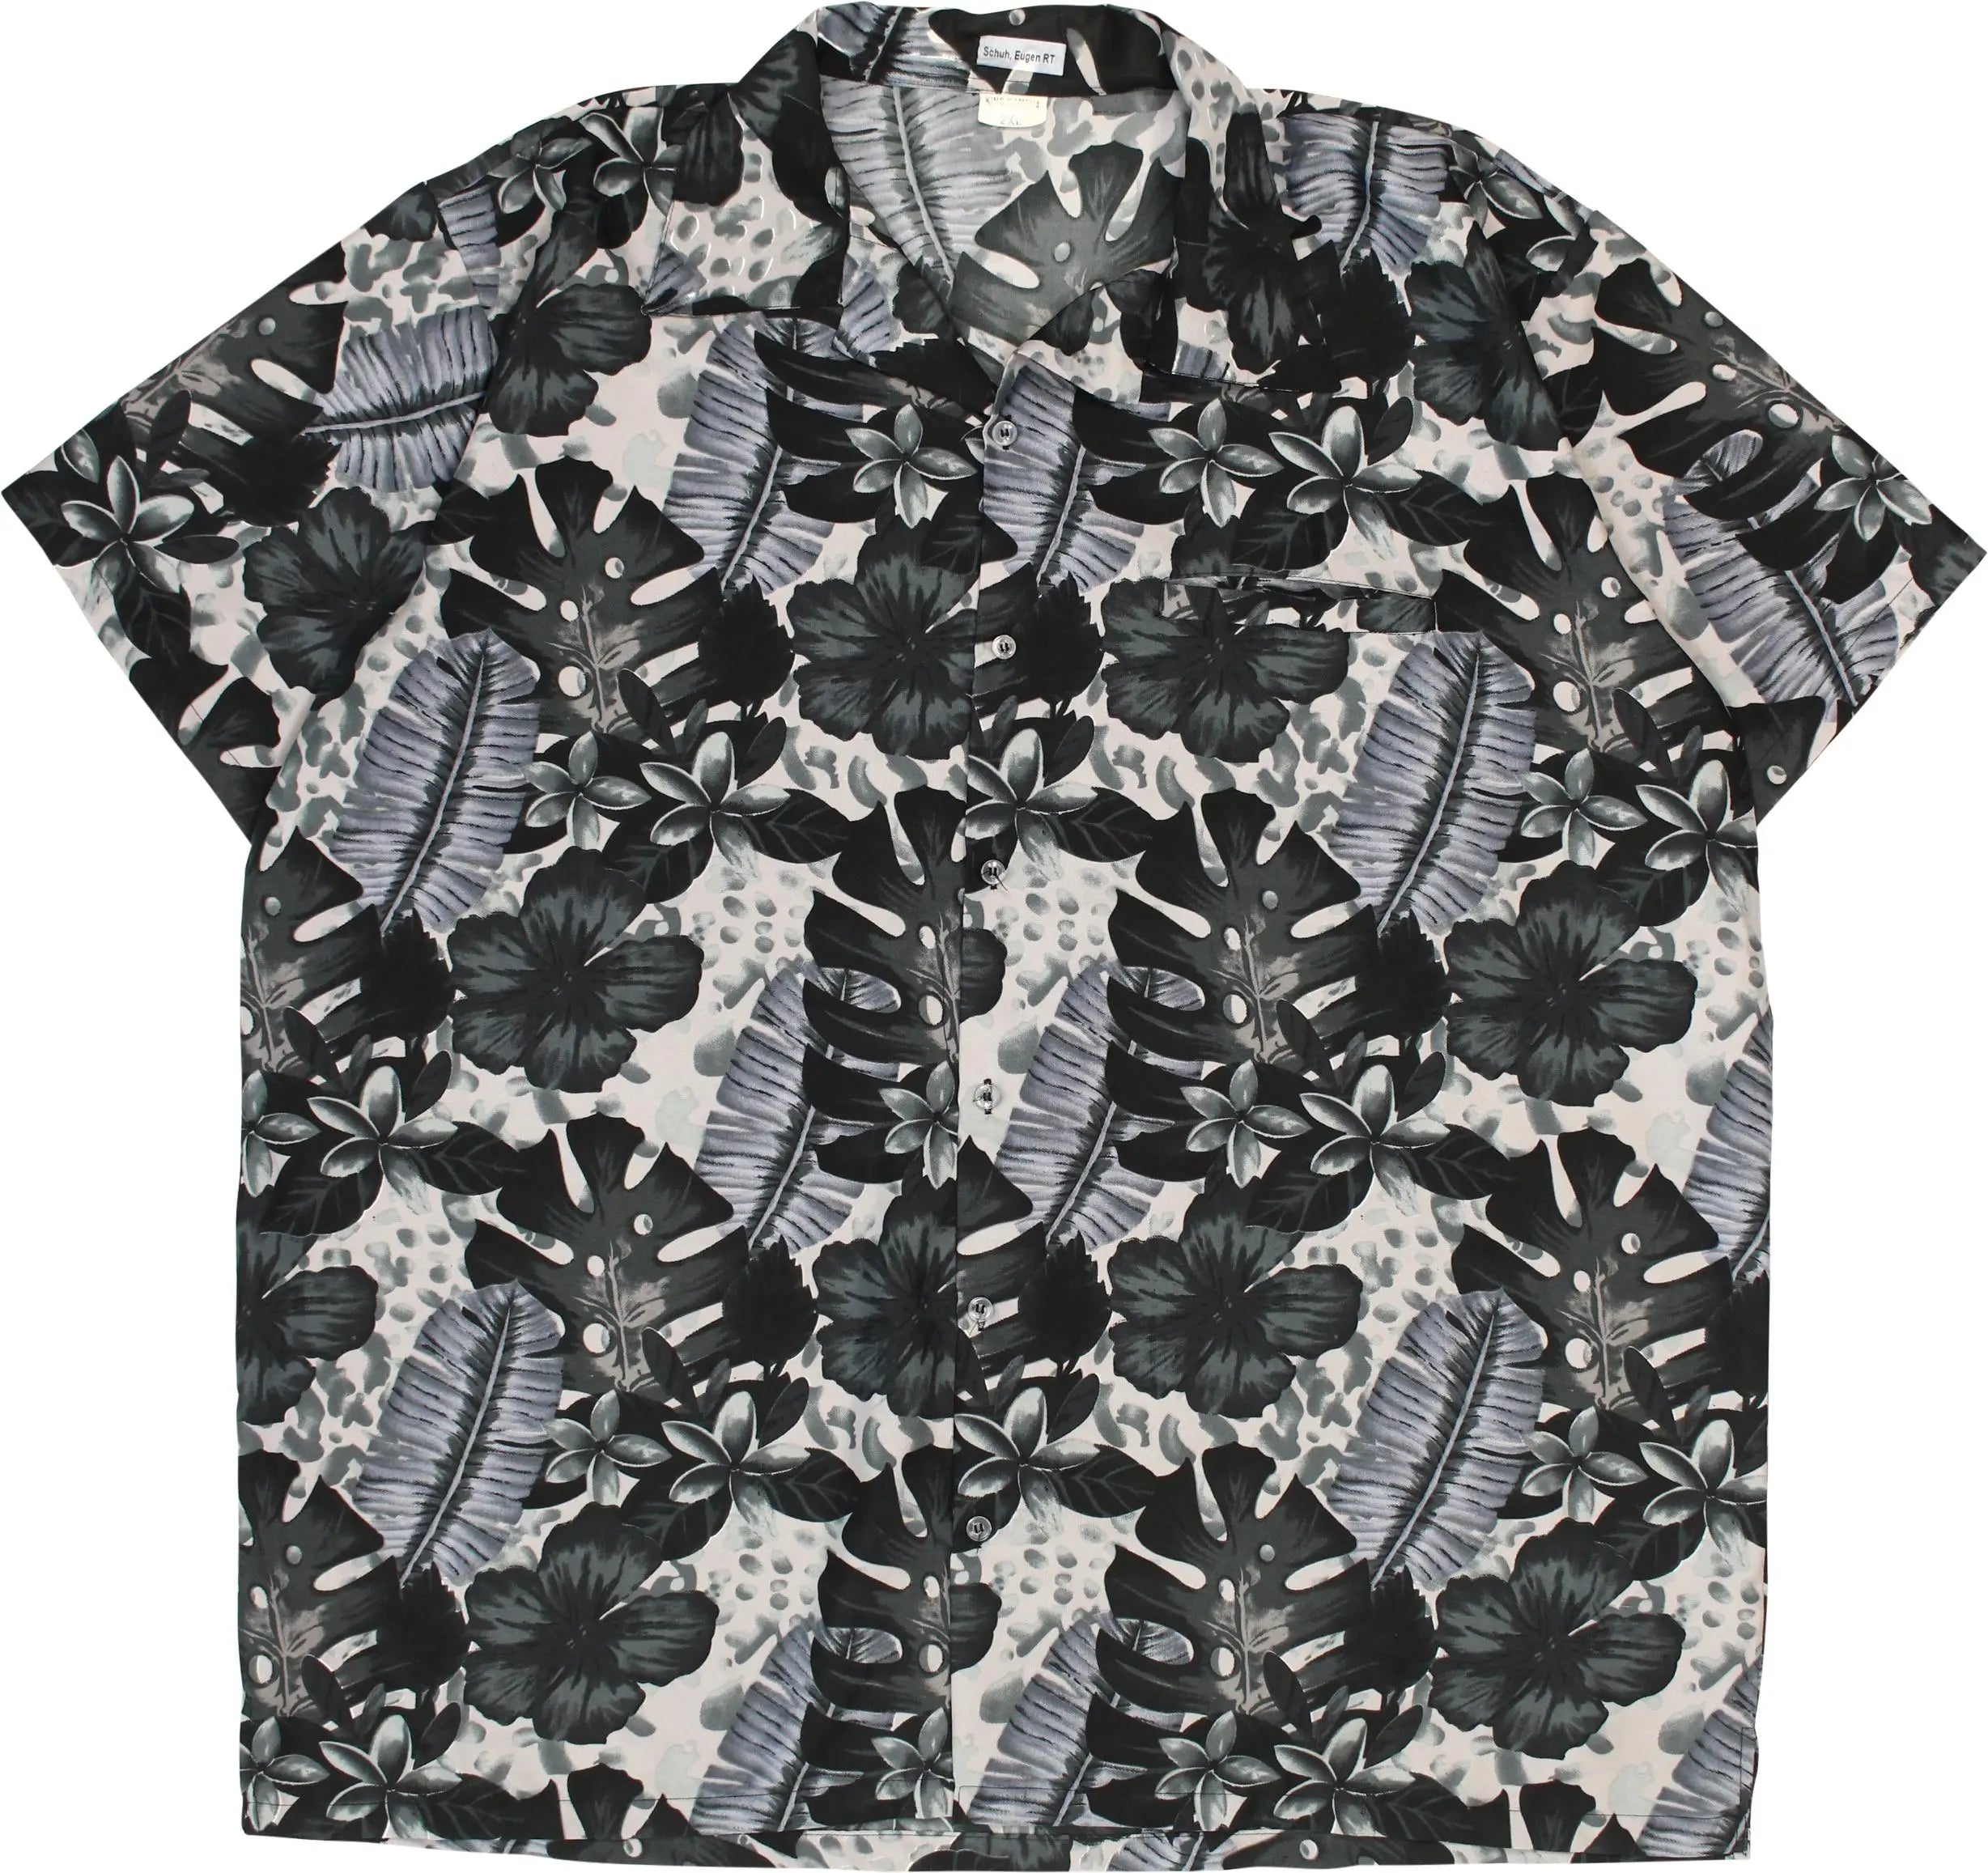 King Kameha - Hawaiian Shirt- ThriftTale.com - Vintage and second handclothing